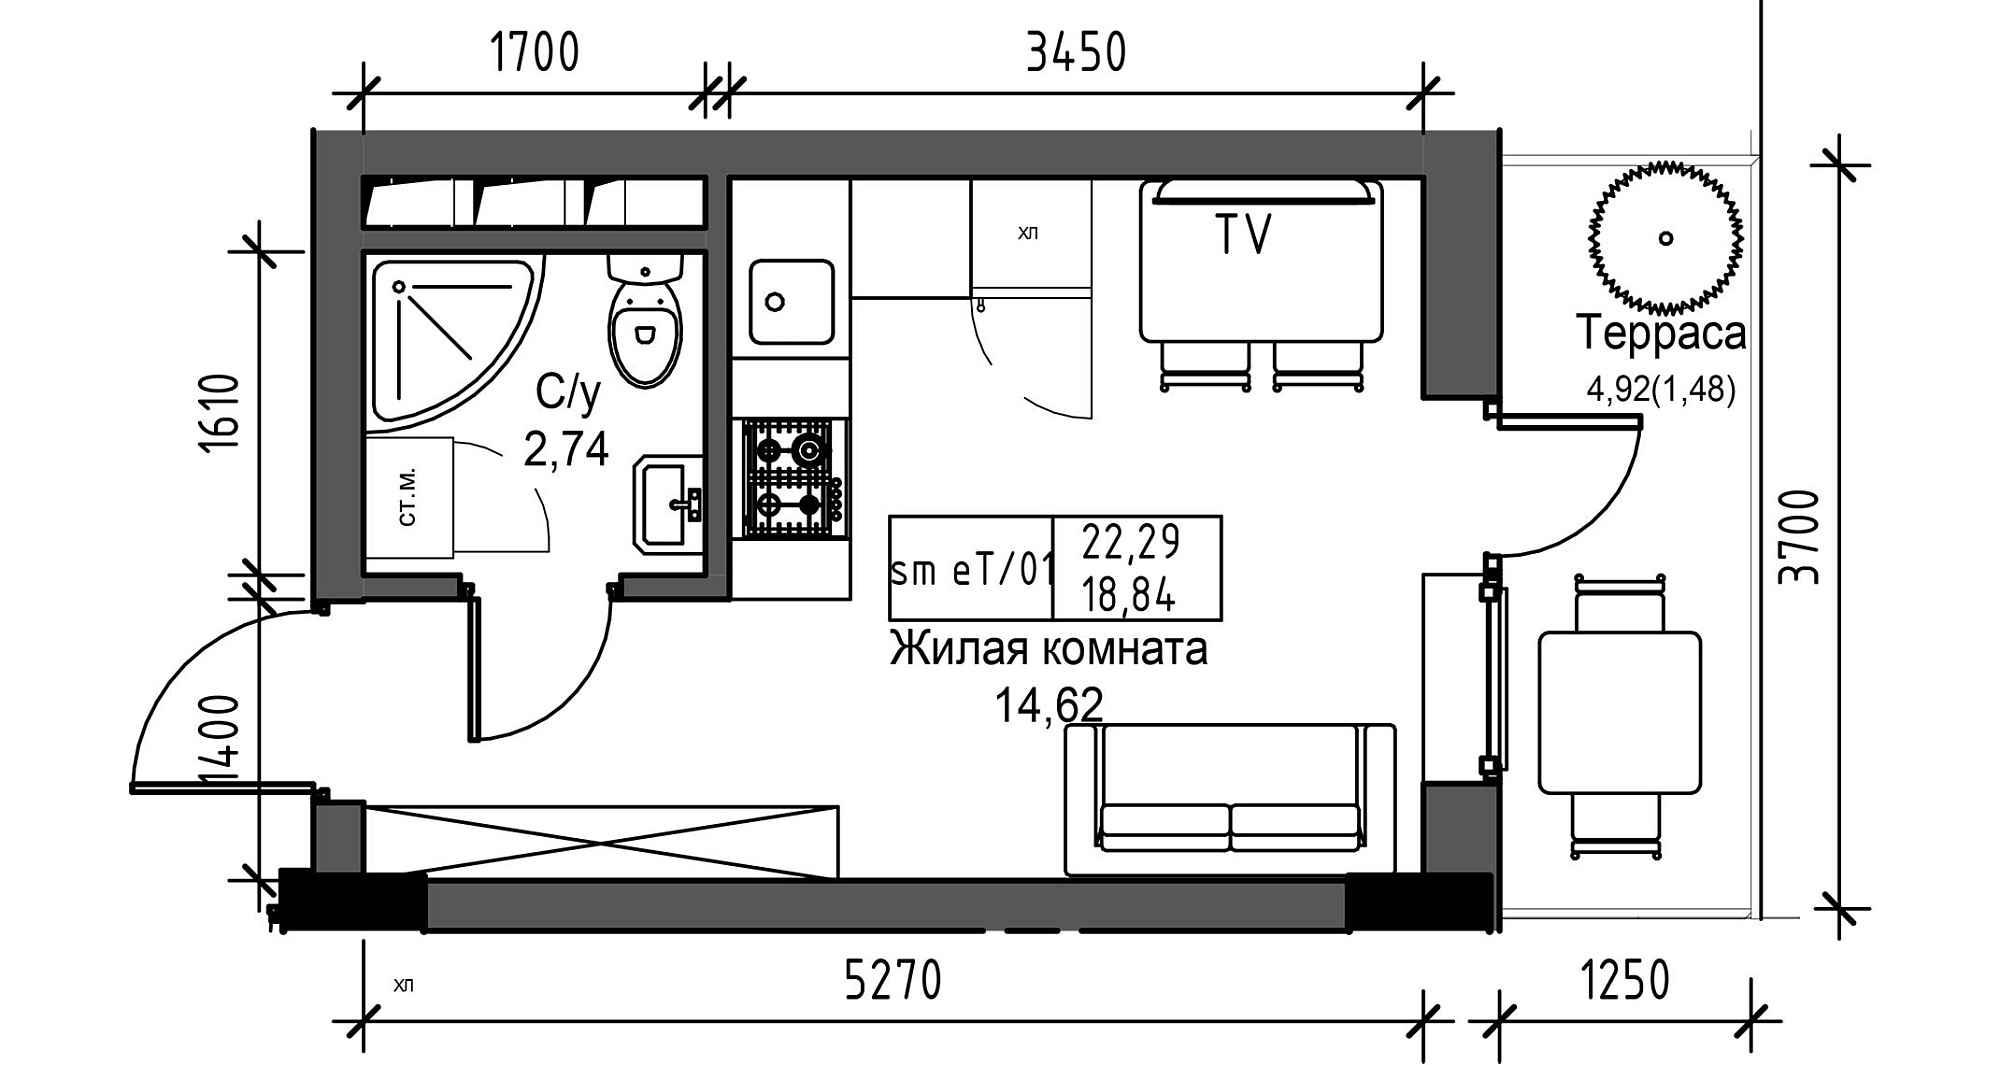 Planning Smart flats area 18.84m2, UM-003-07/0071.